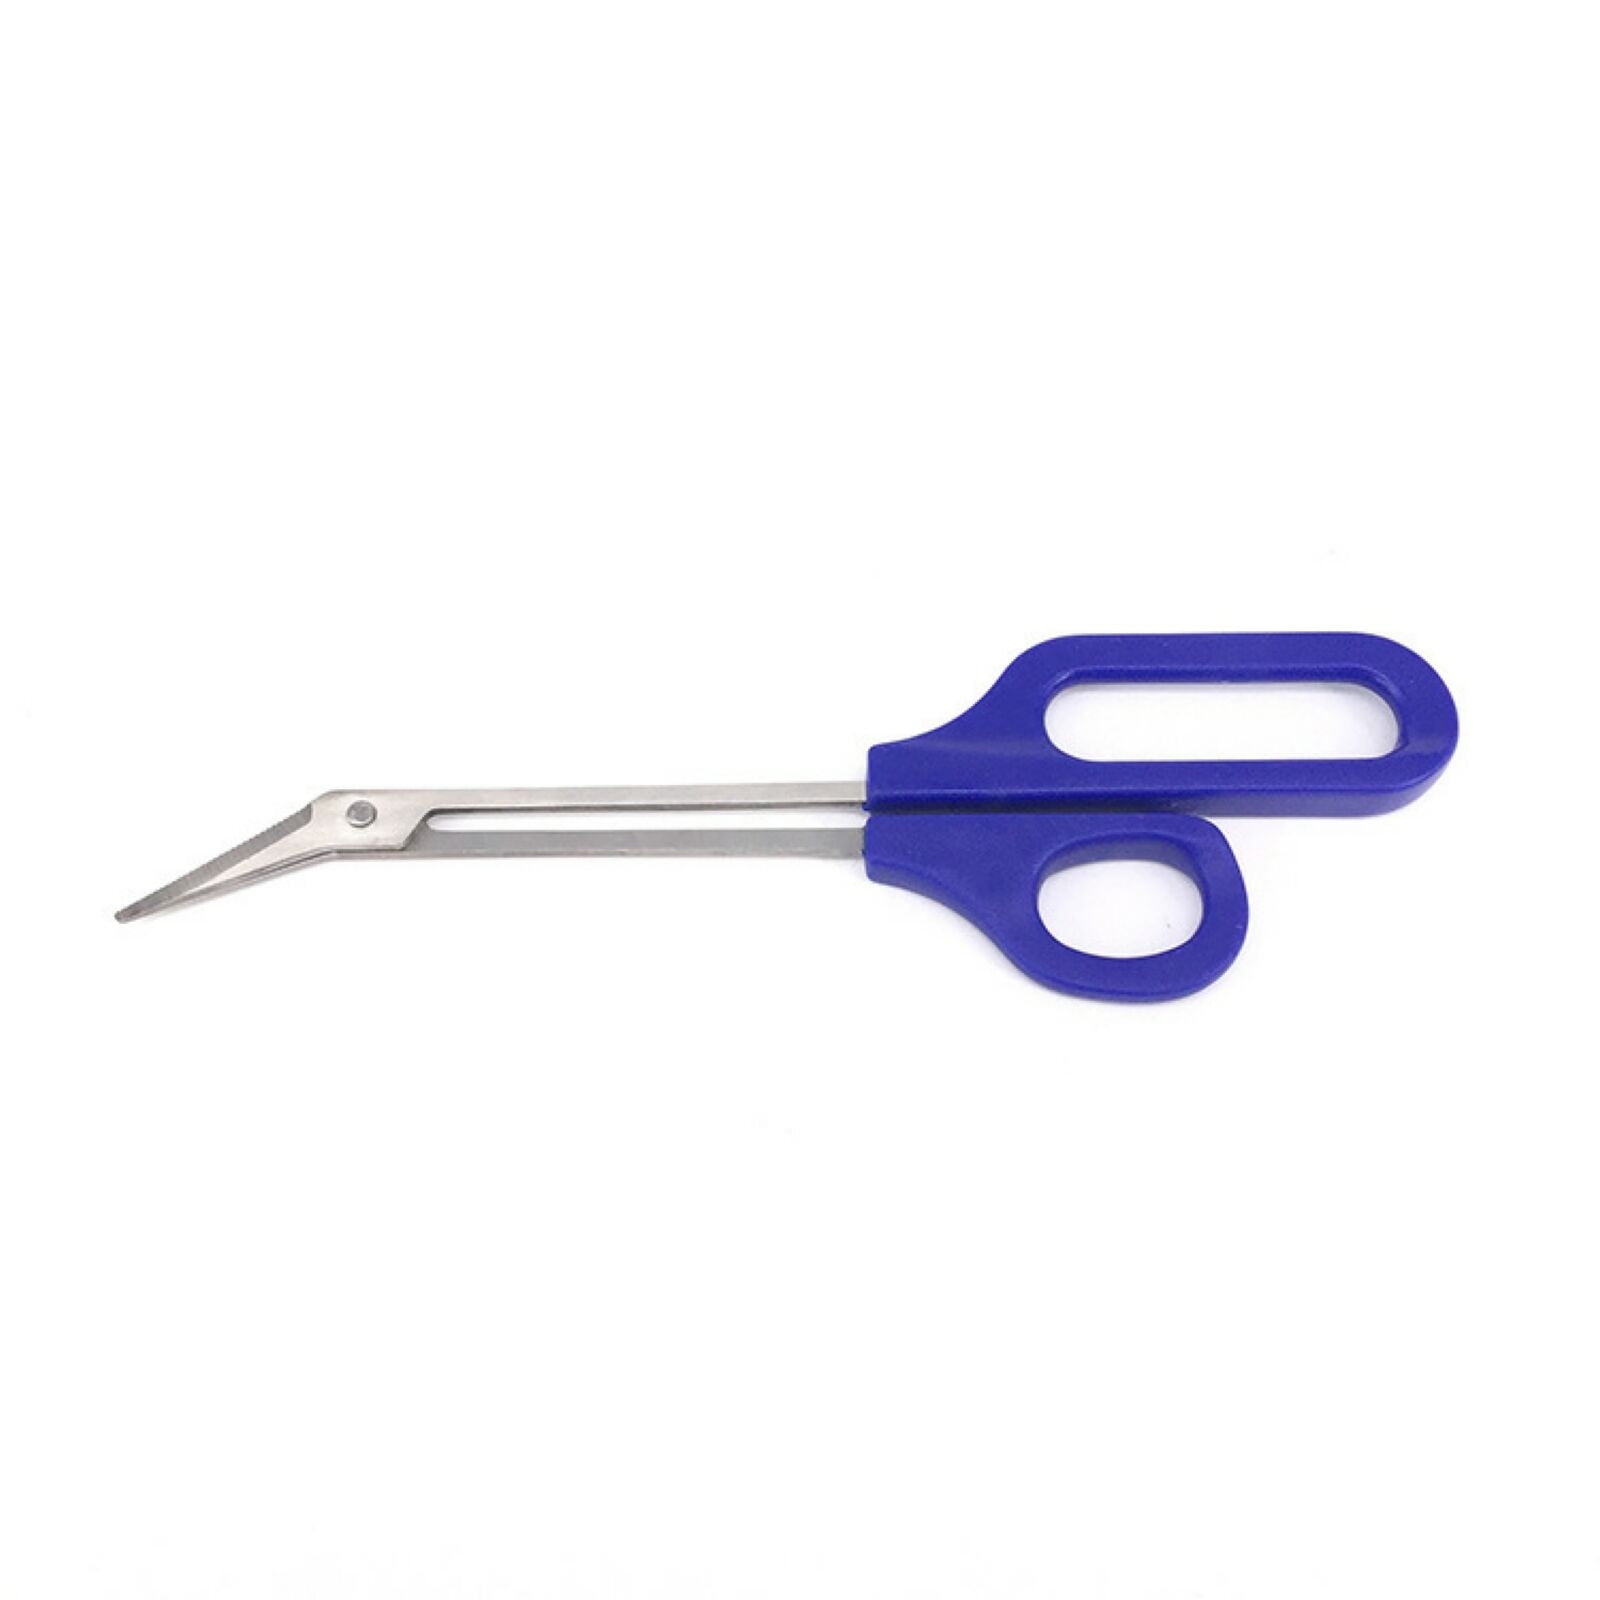 Onhuon Scissors Long Handle Nail Clippers Toenail Toe Ergonomic Care Pedicure Cutter, Size: One size, Blue